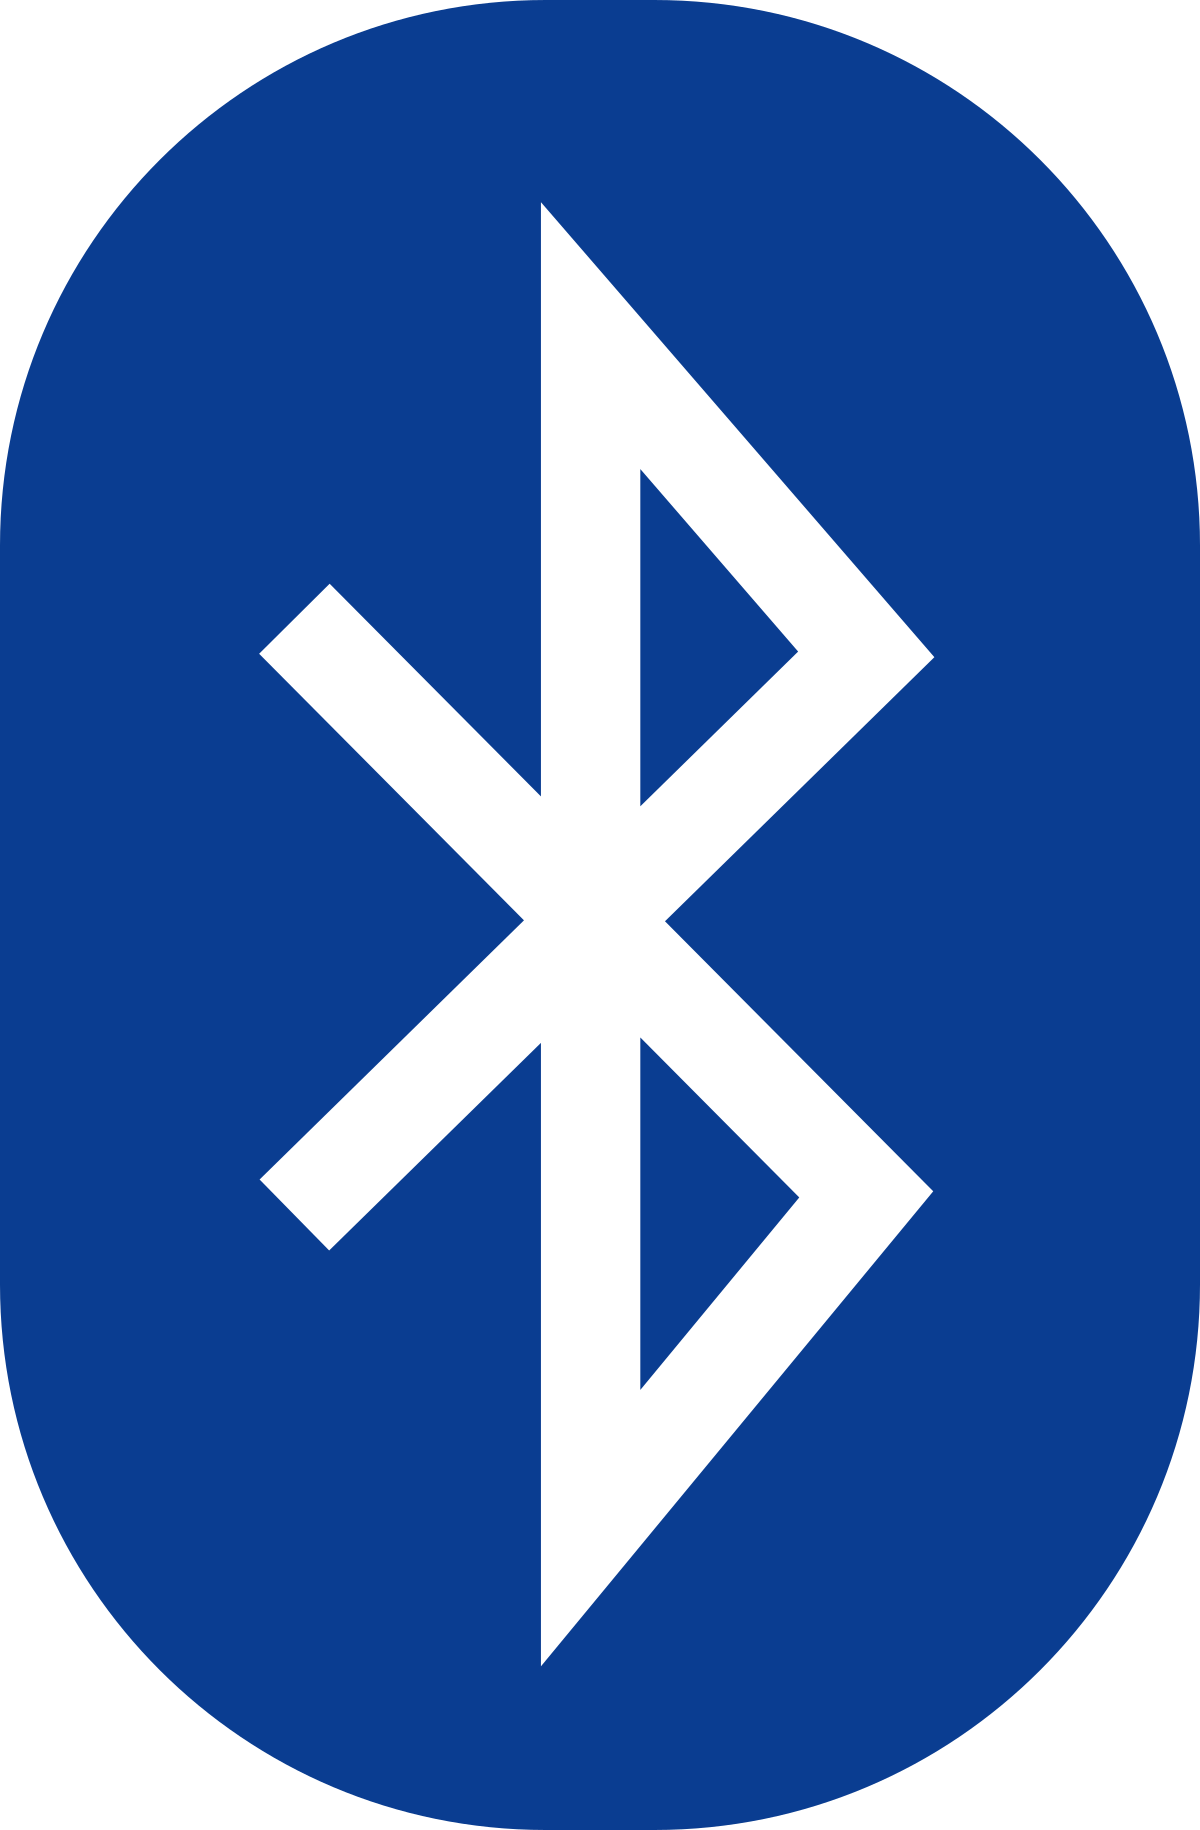 Bluetooth settings interface